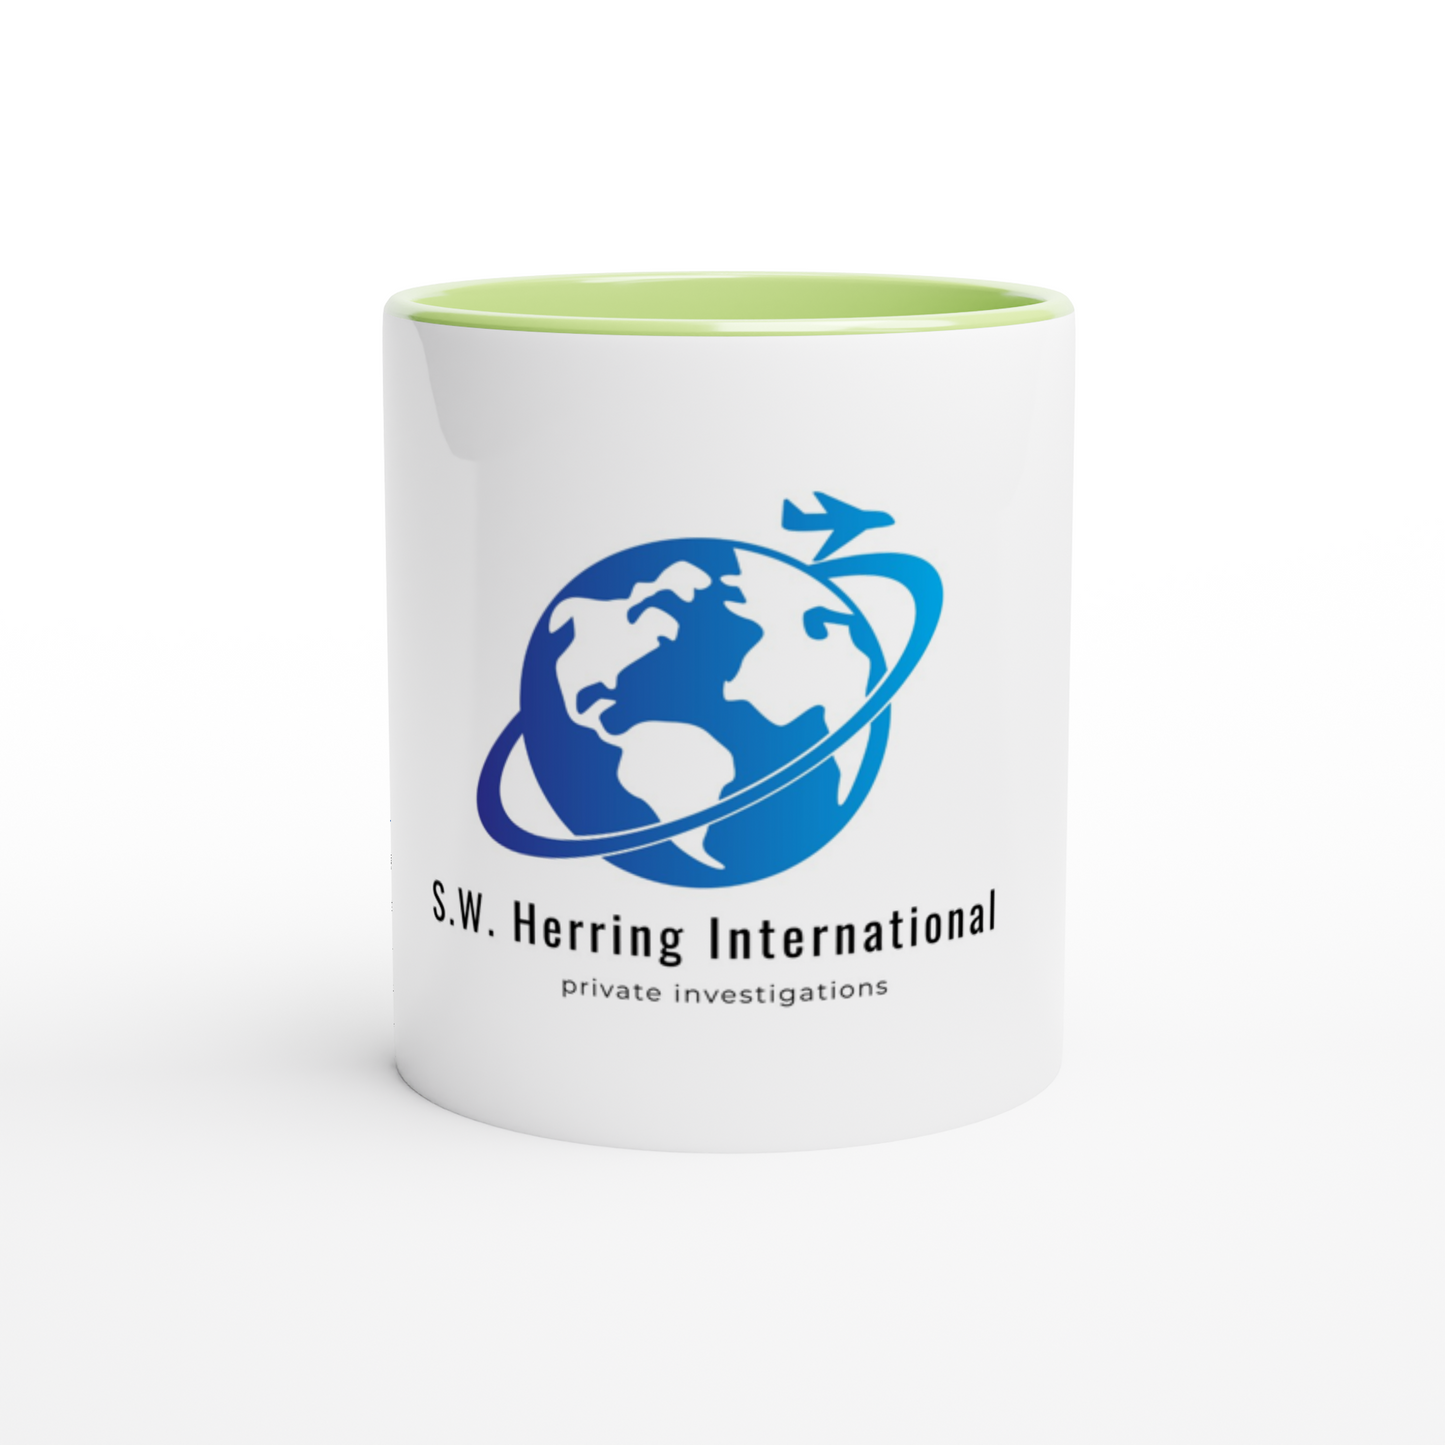 White 11oz Ceramic Mug with Color Inside - S.W. Herring International